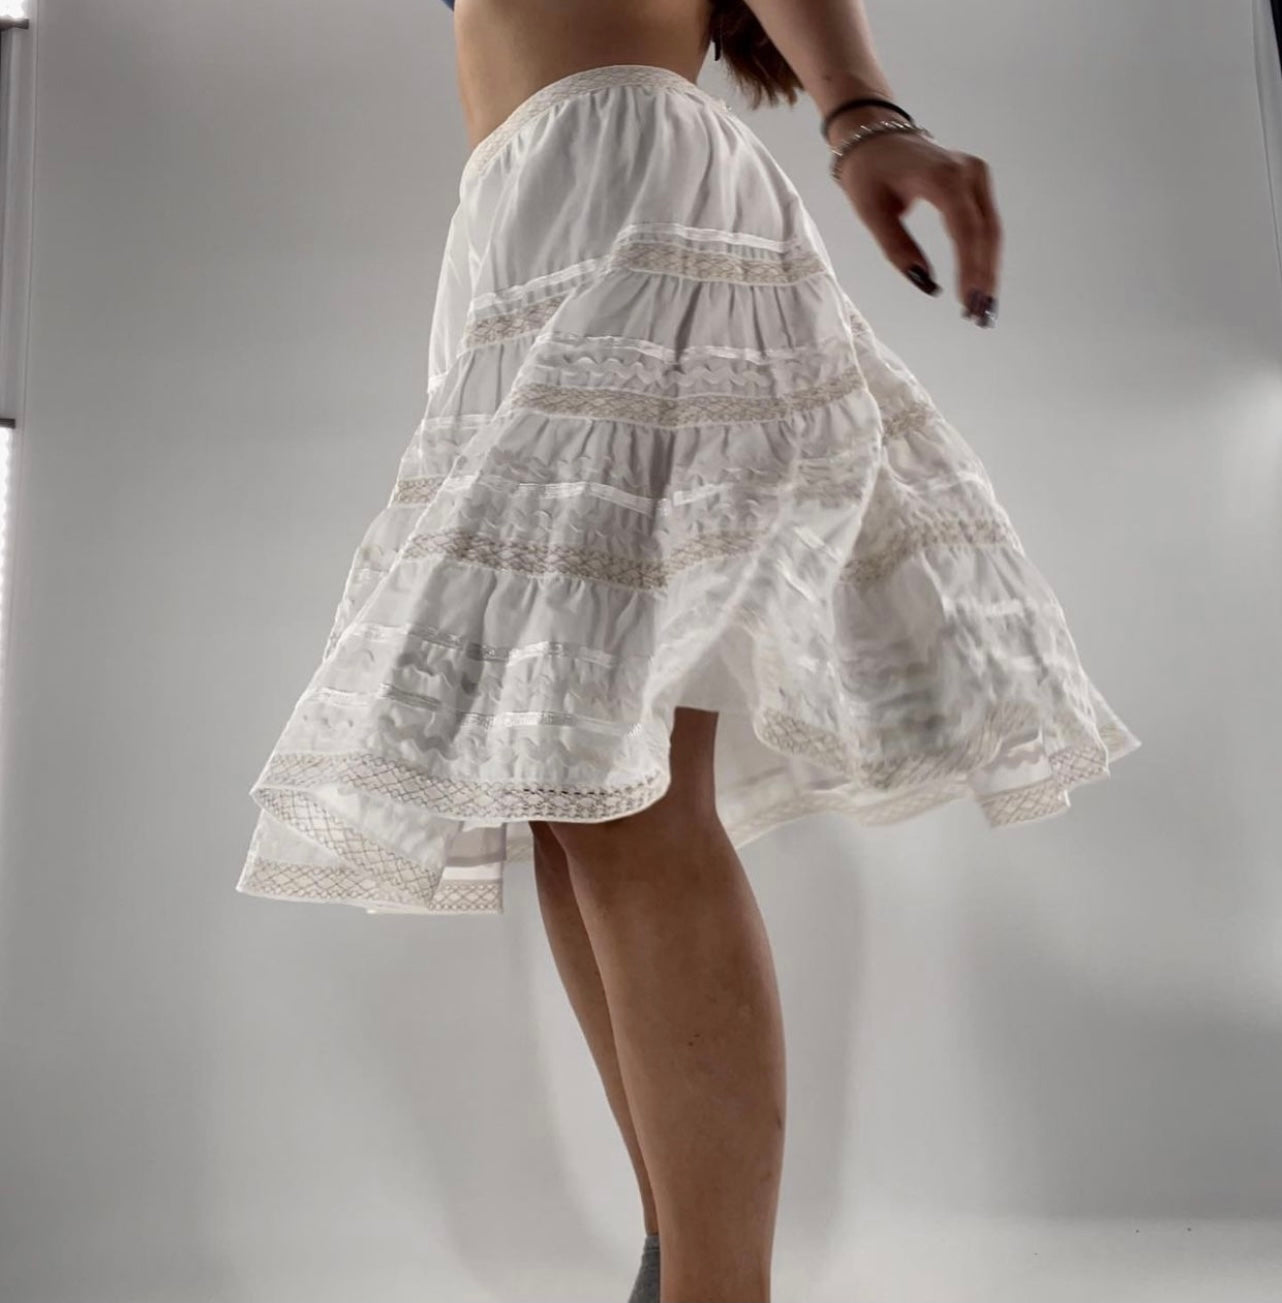 Bloomingdales  - Aqua White Cotton Skirt with Horizontal Ribbon Pattern (Size Small)